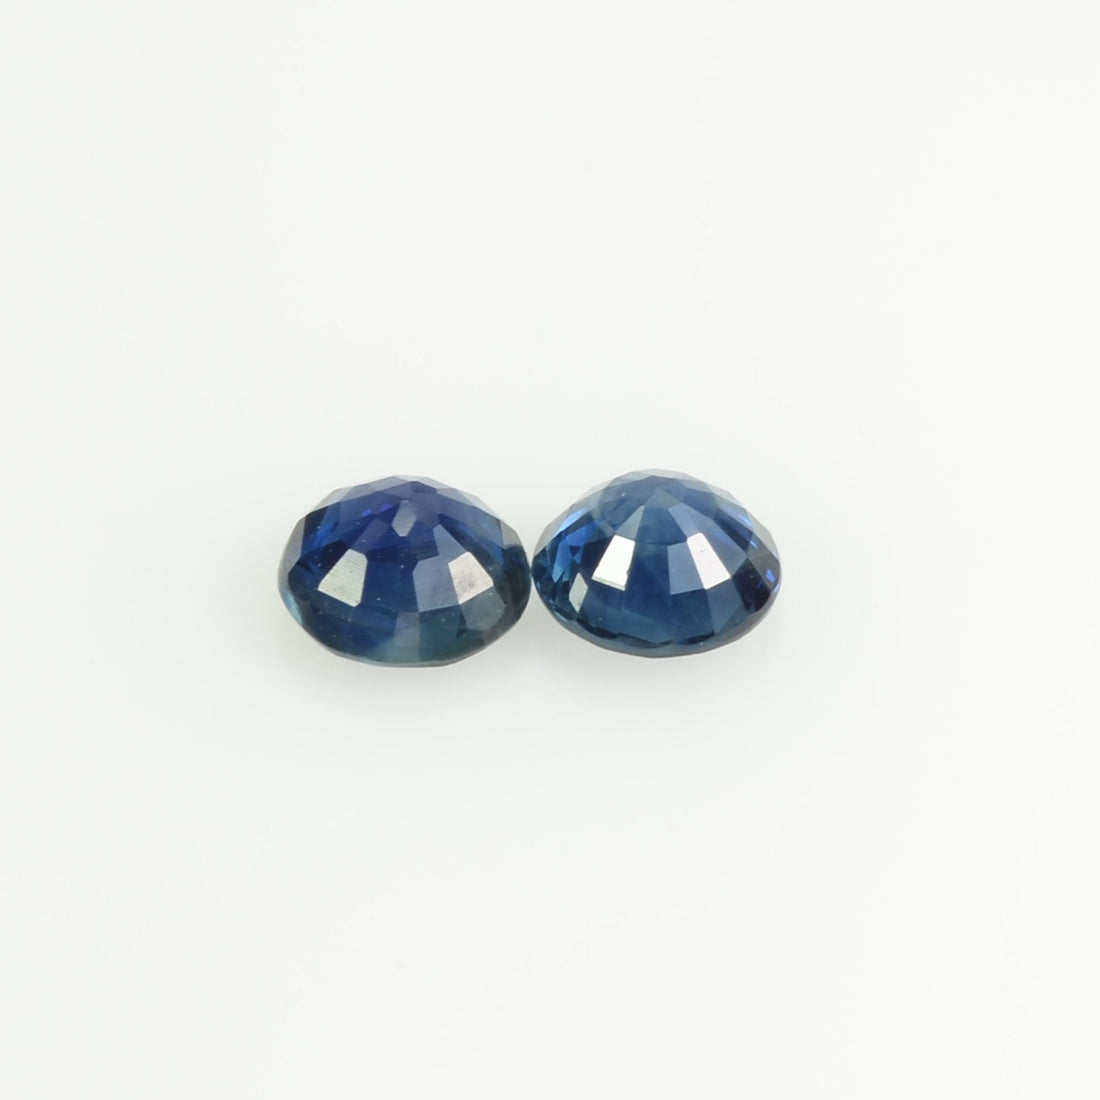 4.4 mm Natural Blue Sapphire Loose Gemstone Round Cut